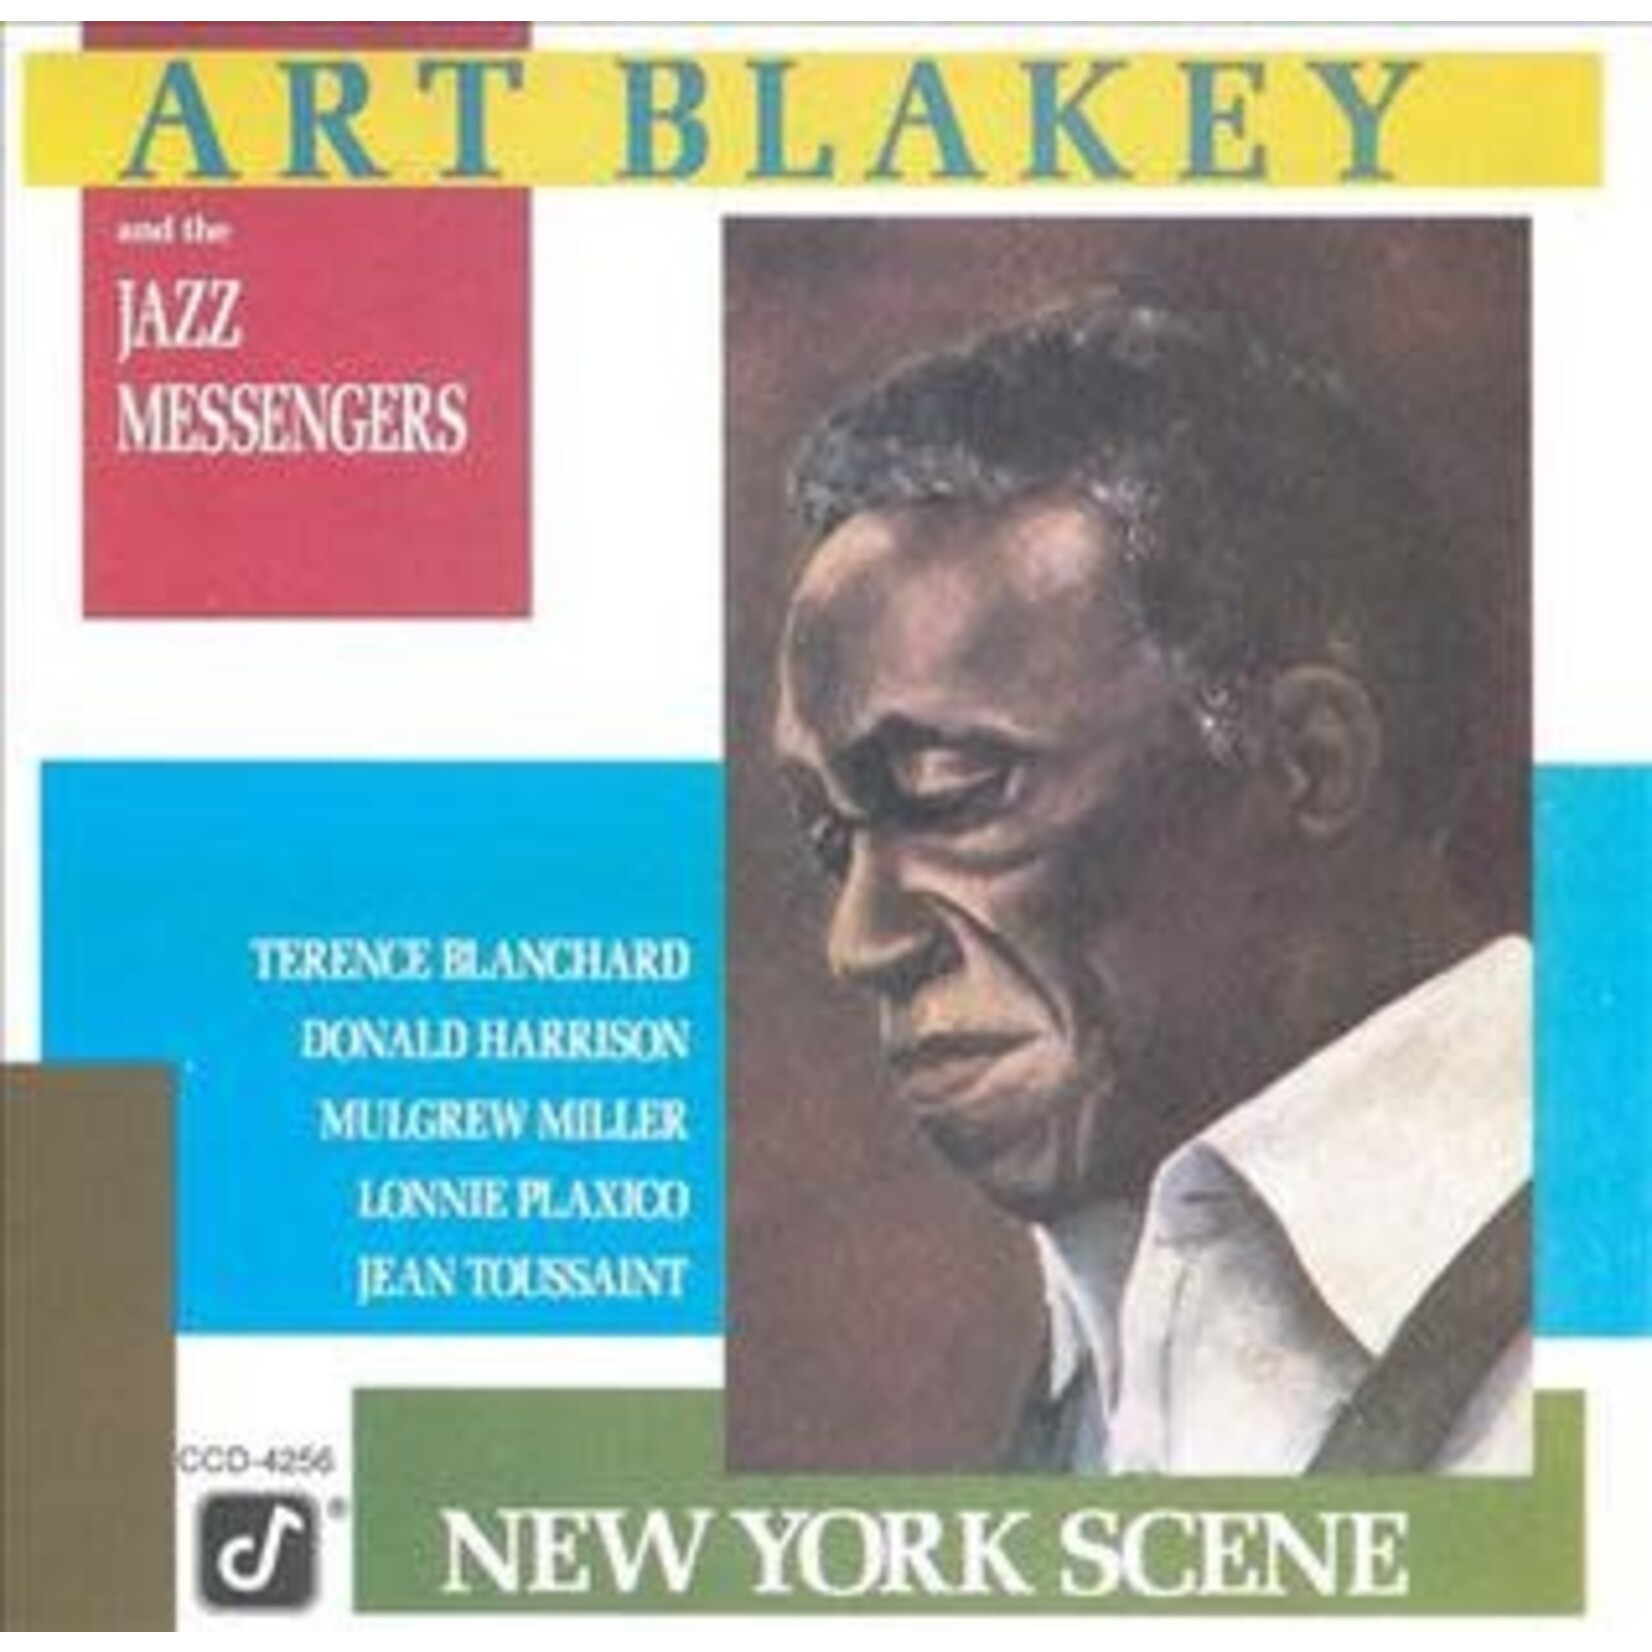 Art Blakey And The Jazz Messengers - New York Scene - Vinyl LP (USED - PROMO)